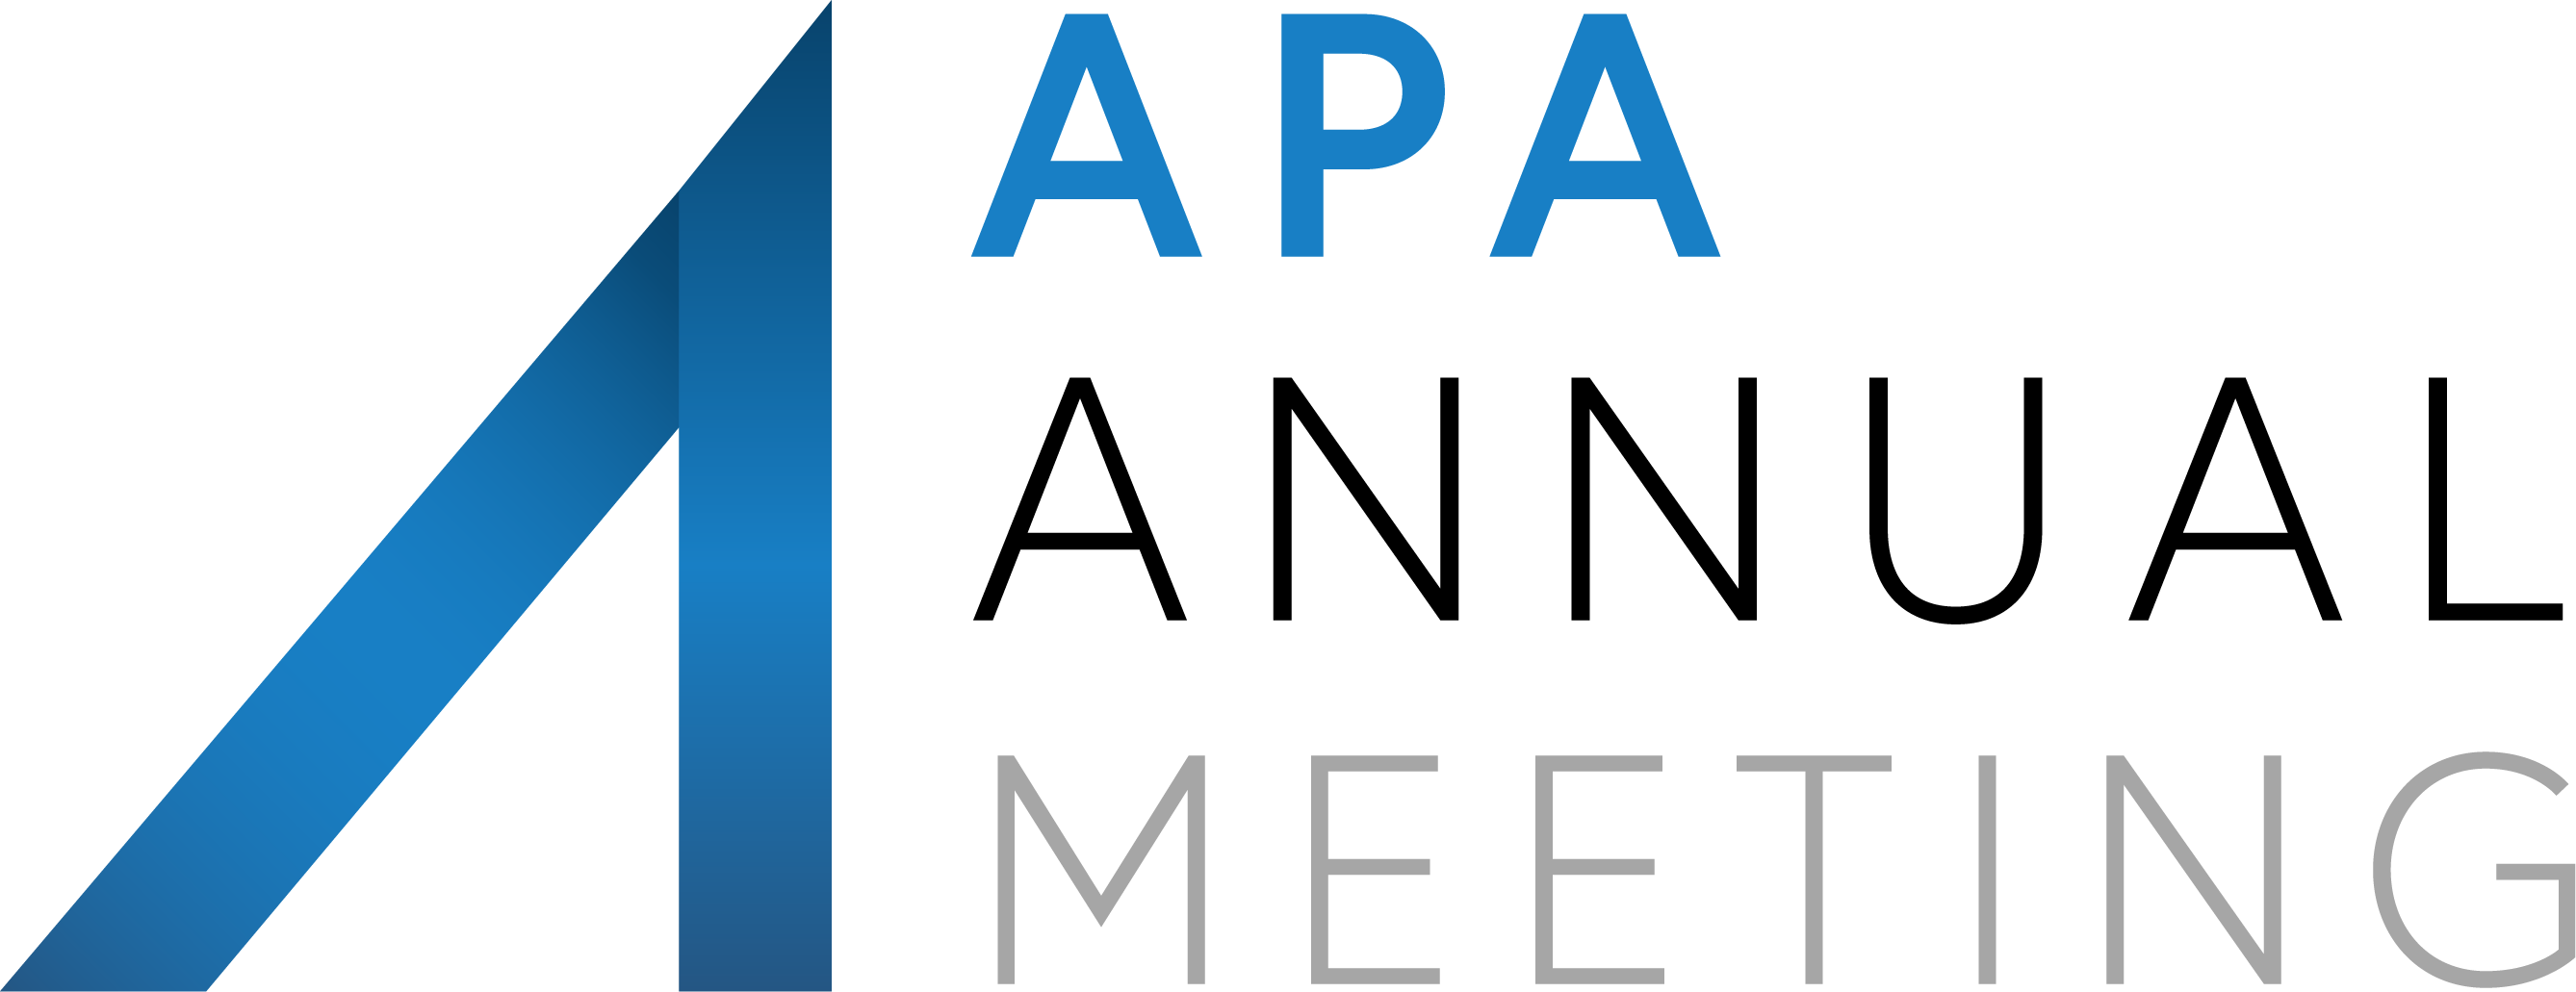 APA Annual Meeting